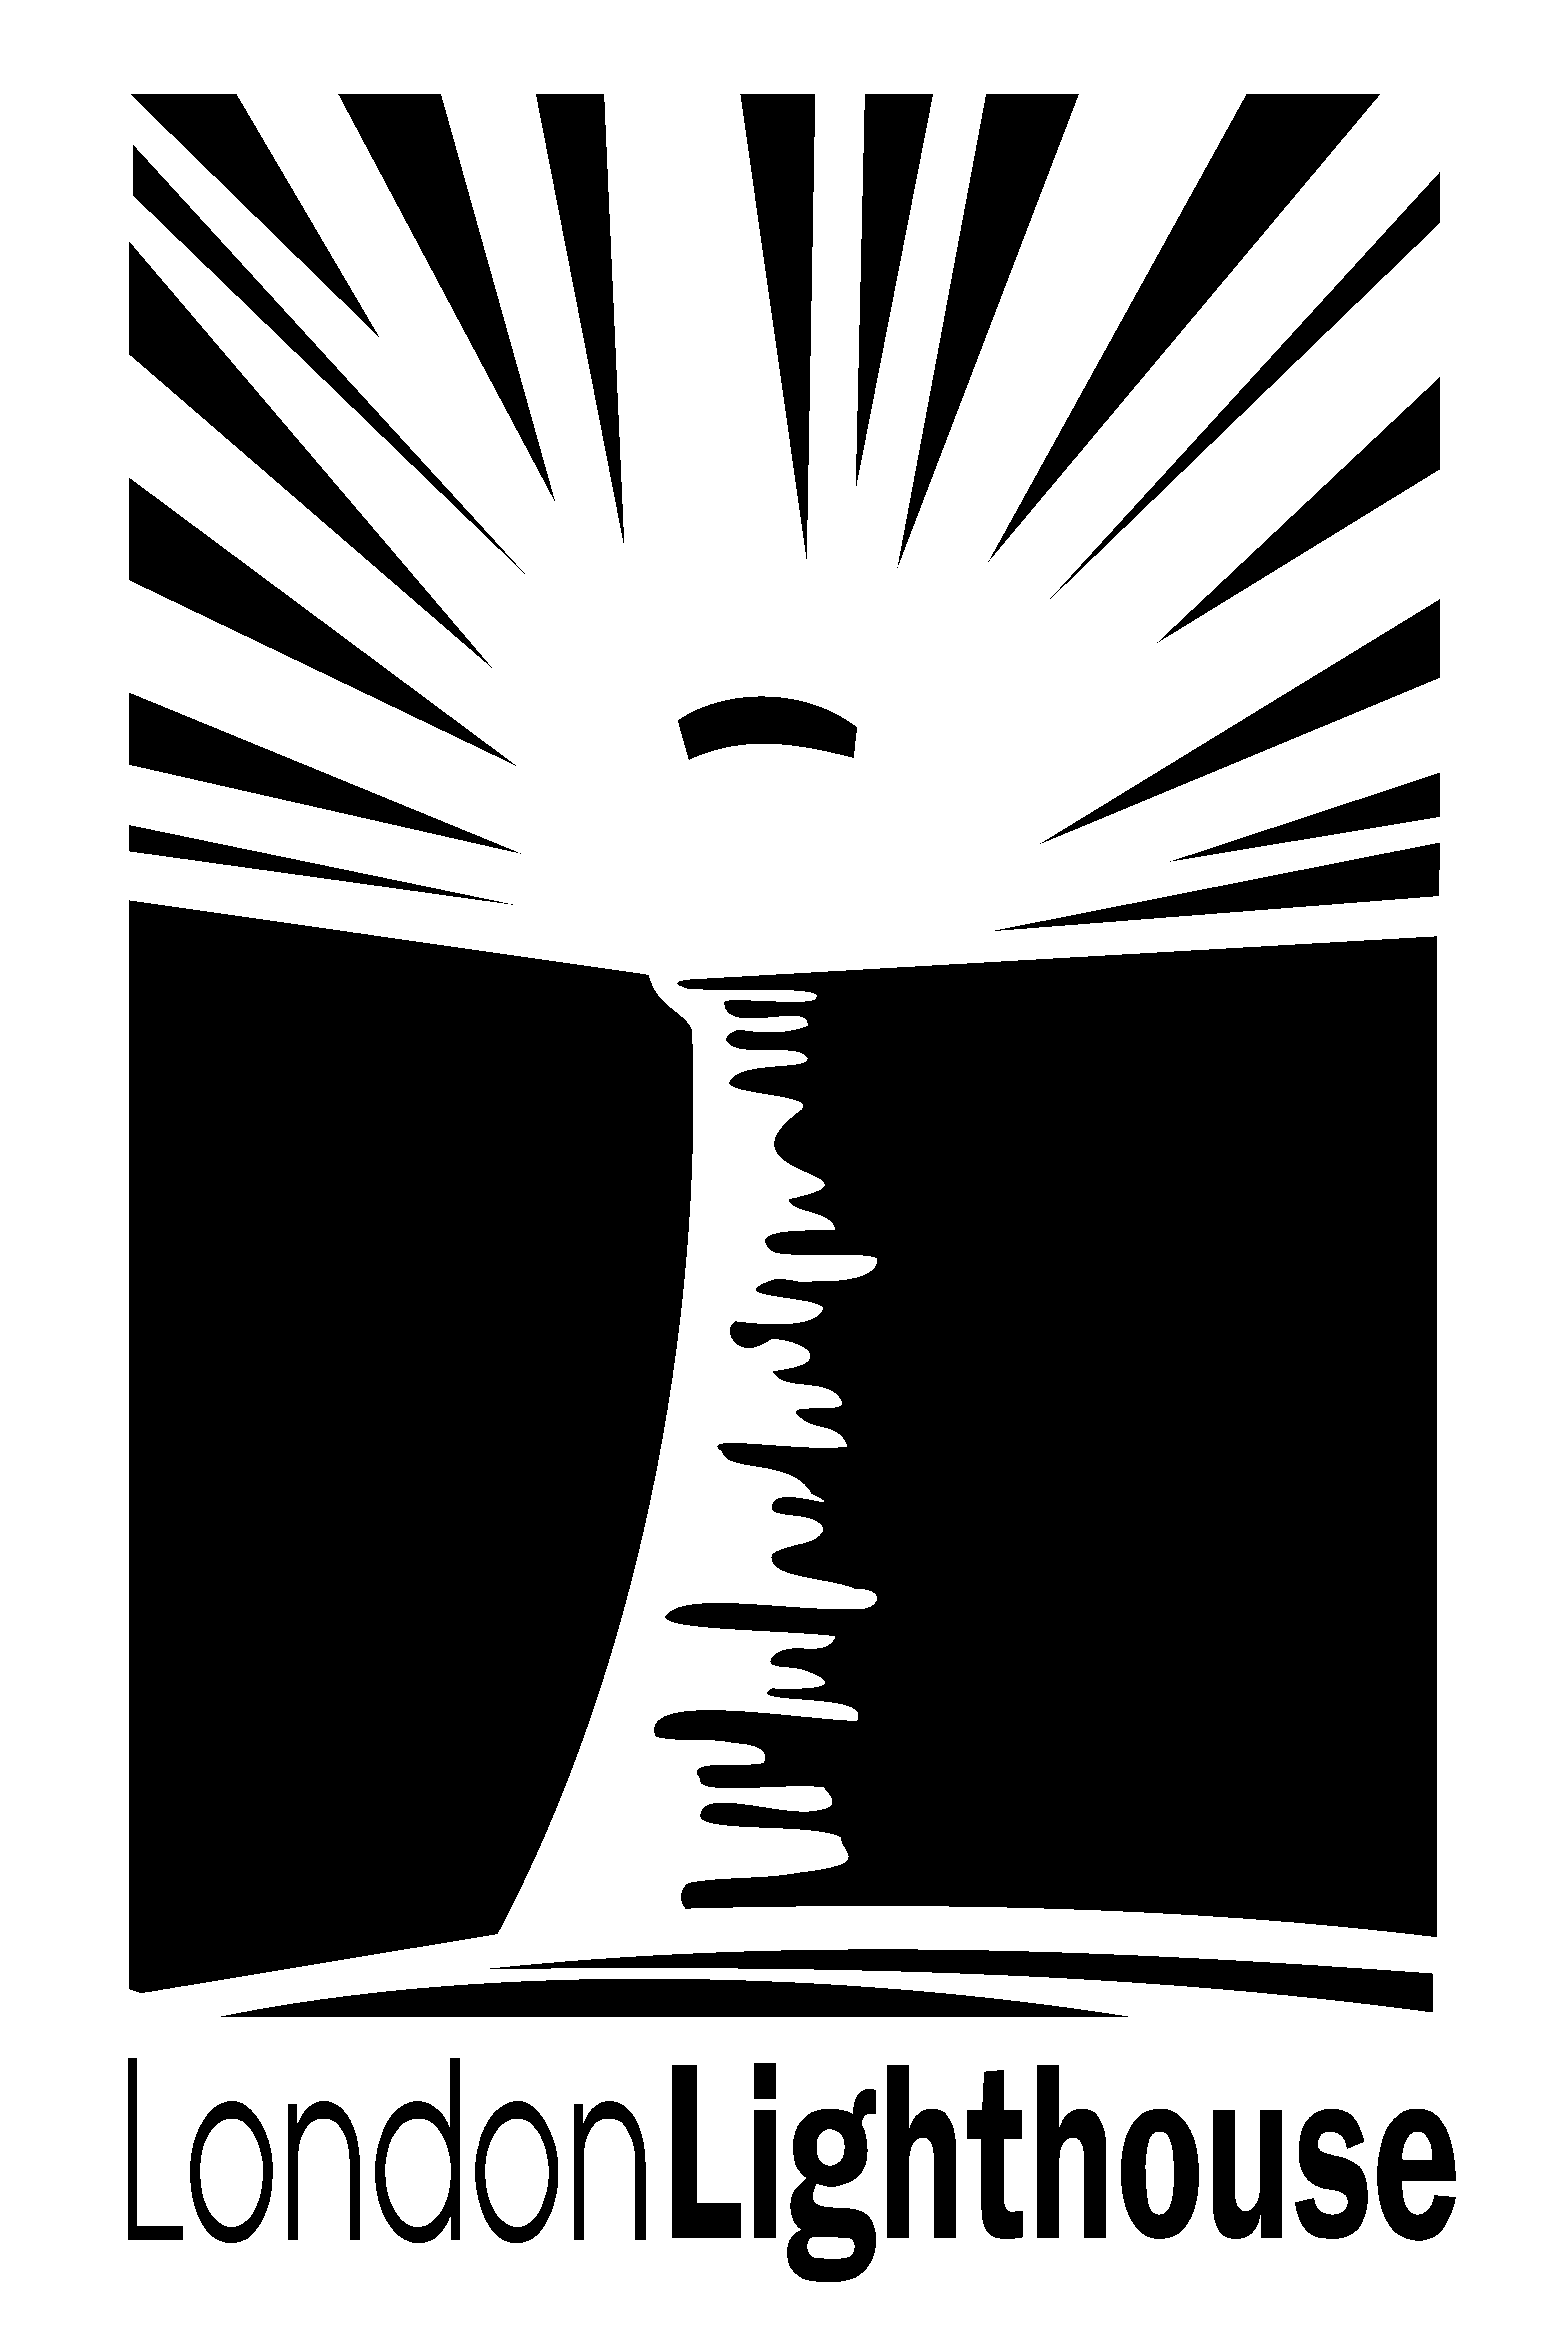 London Lighthouse Logo Black And White - Icon Design (2400x2400)